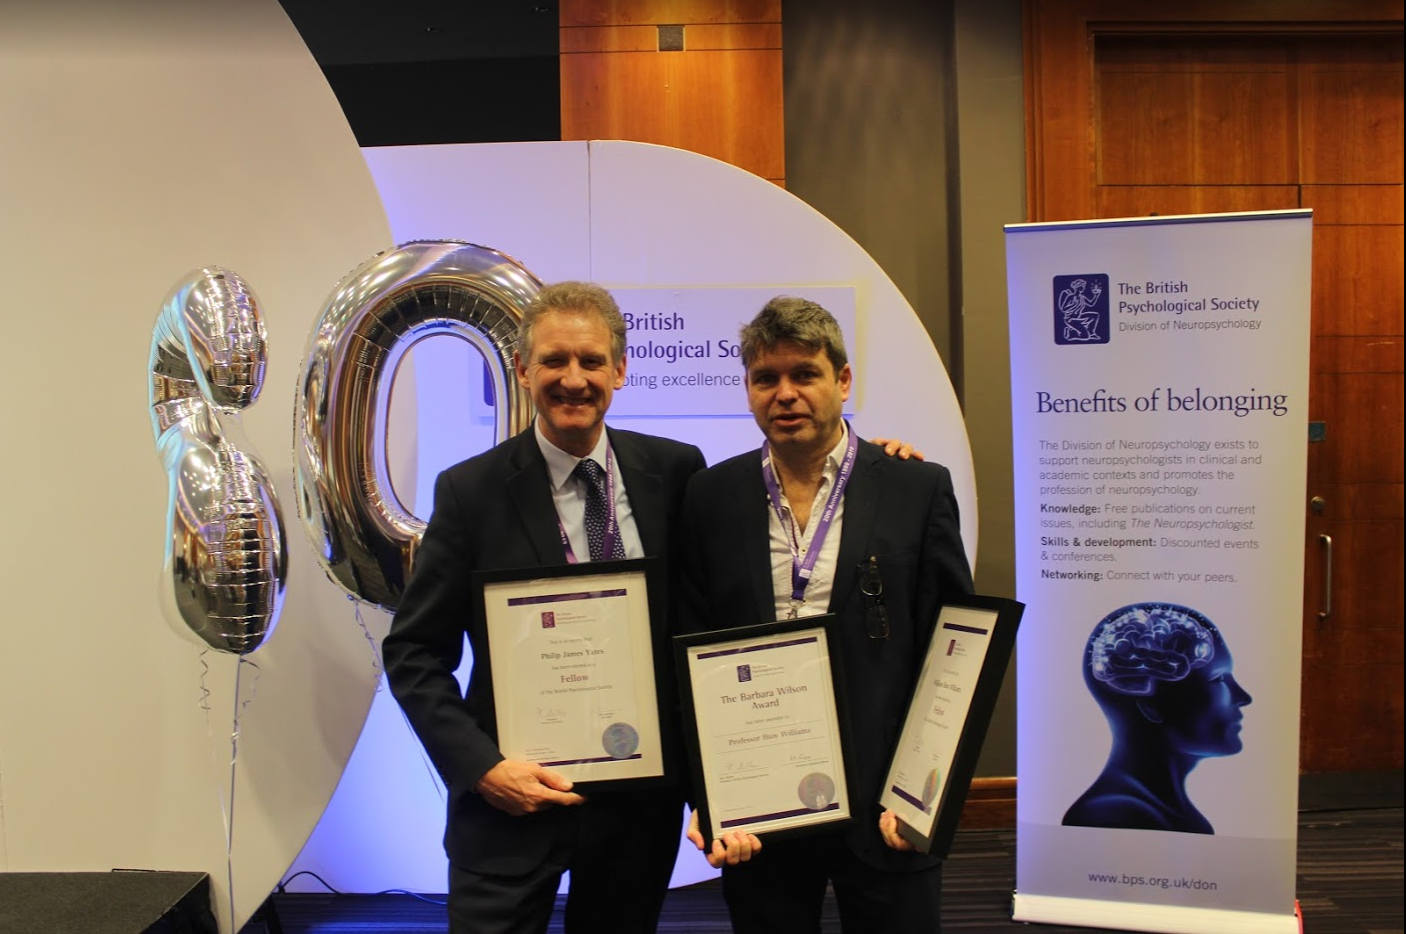 GW4 Academic receives prestigious award for Research in Traumatic Brain Injury